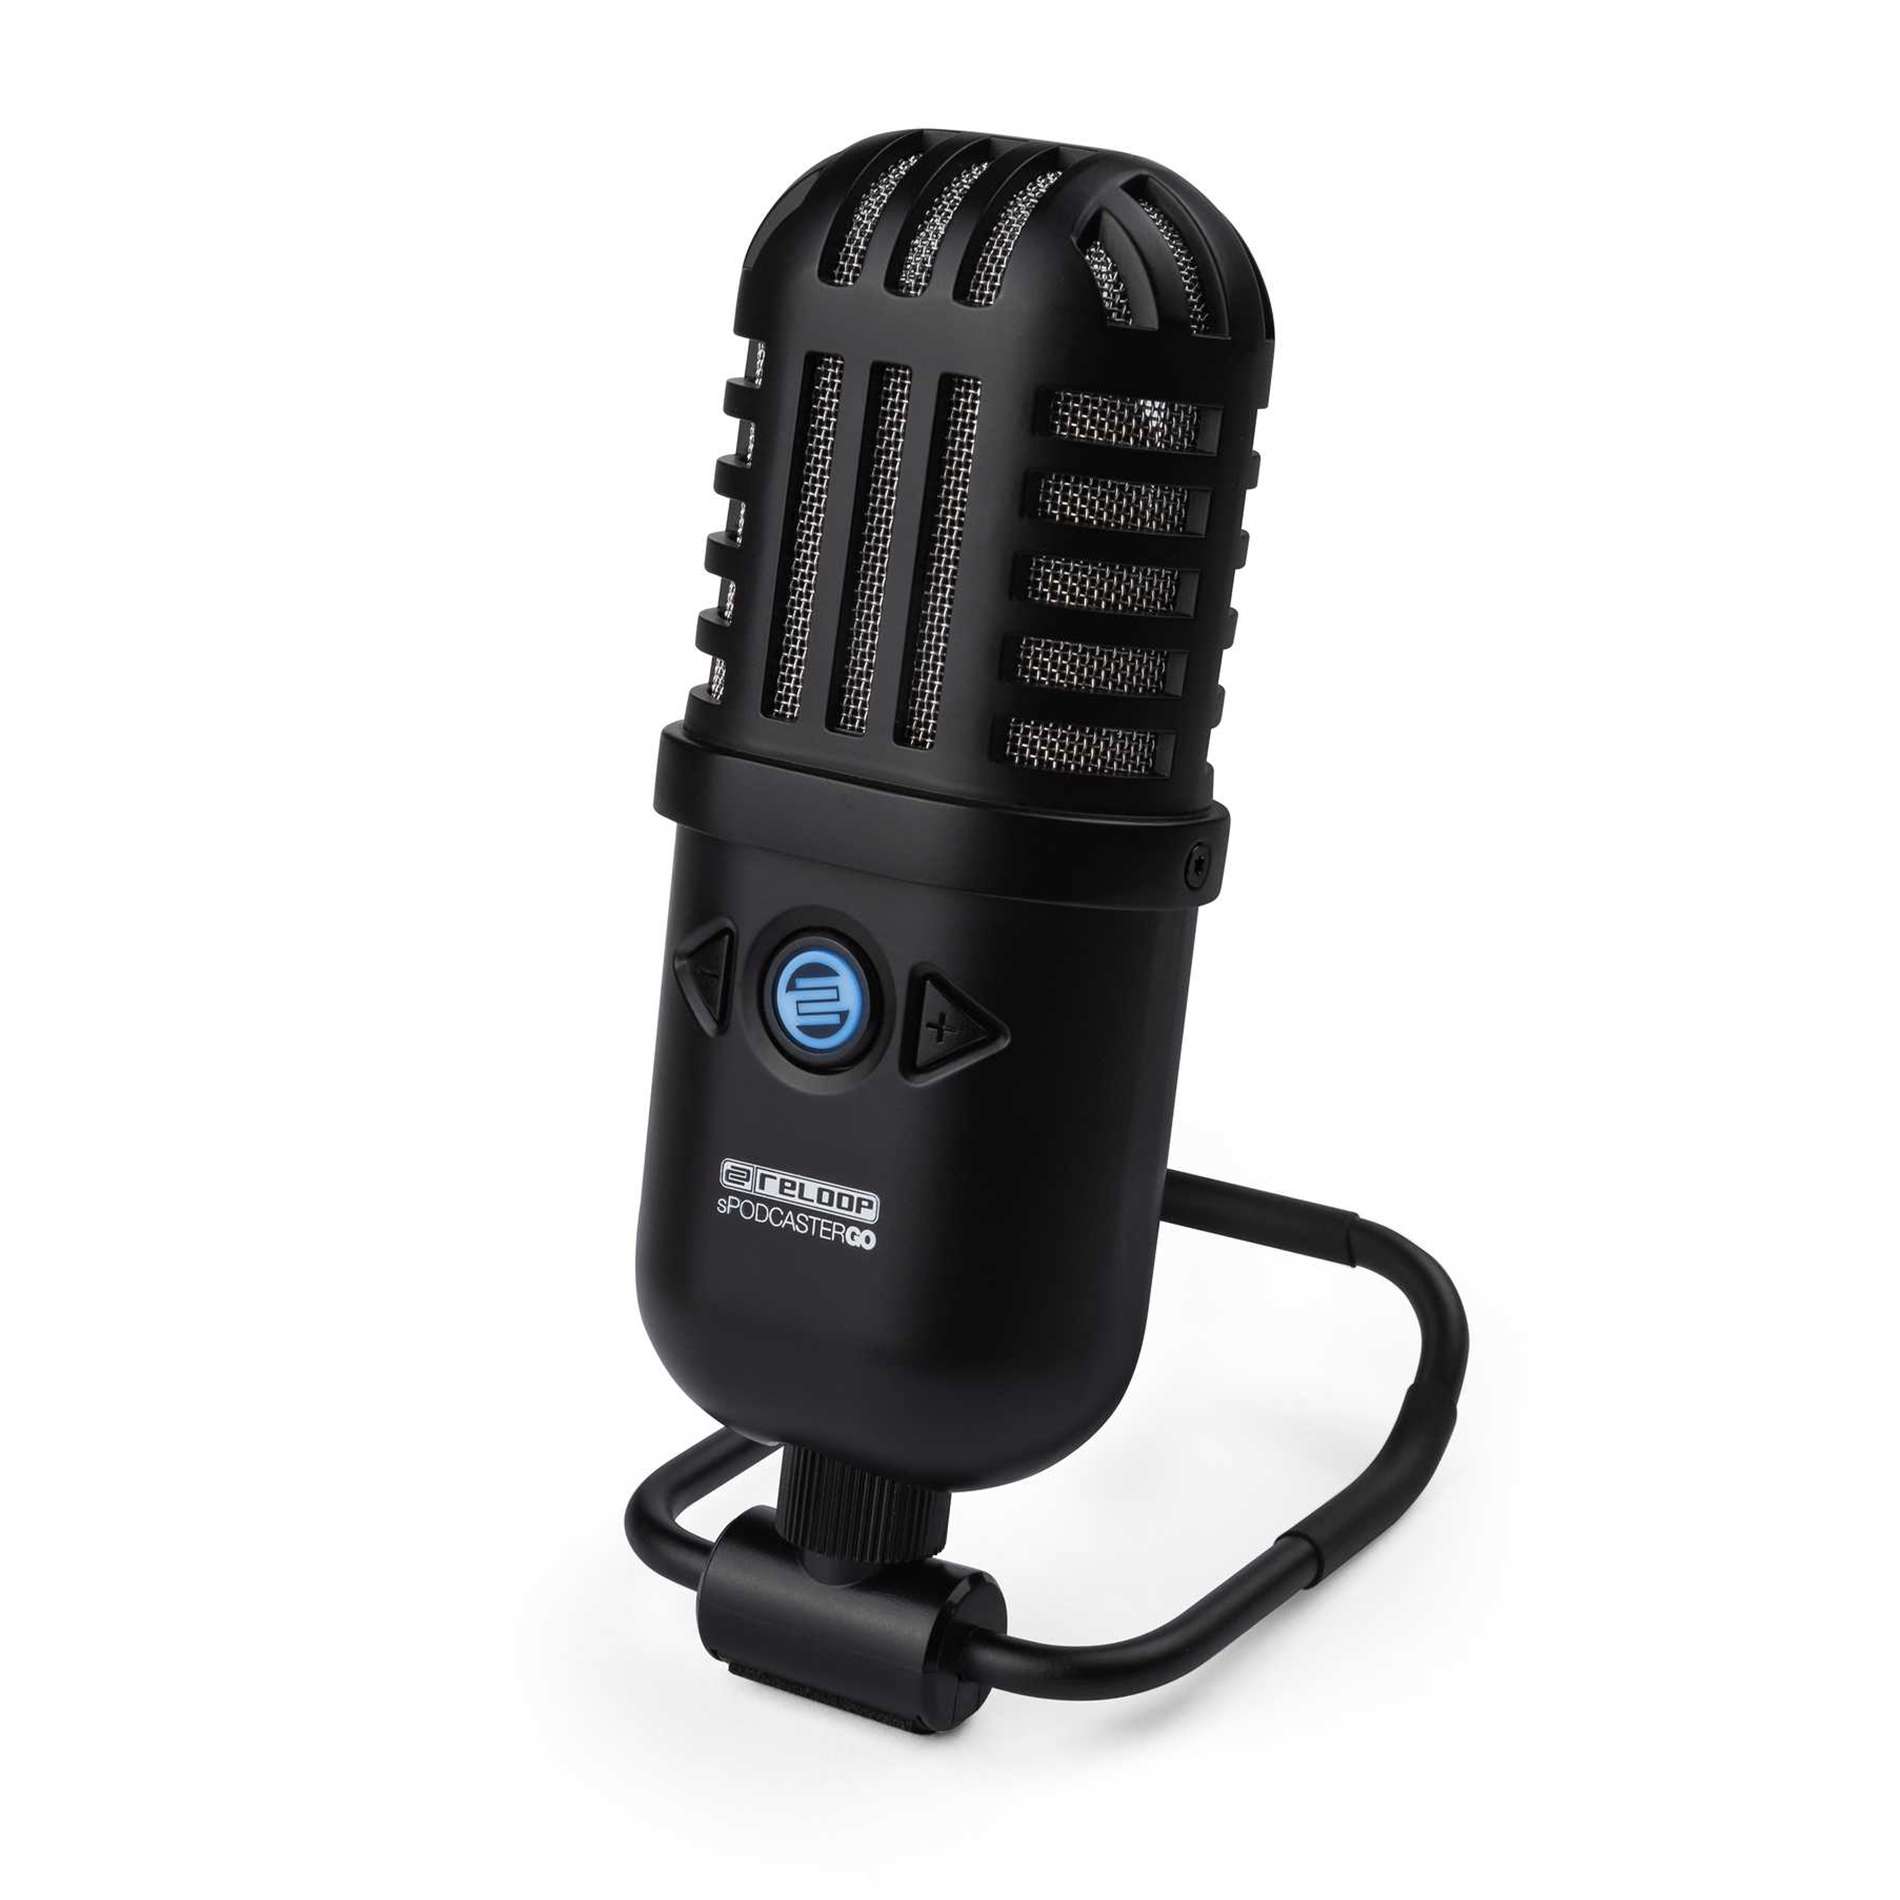 Reloop Spodcaster Go - Microphone usb - Variation 1